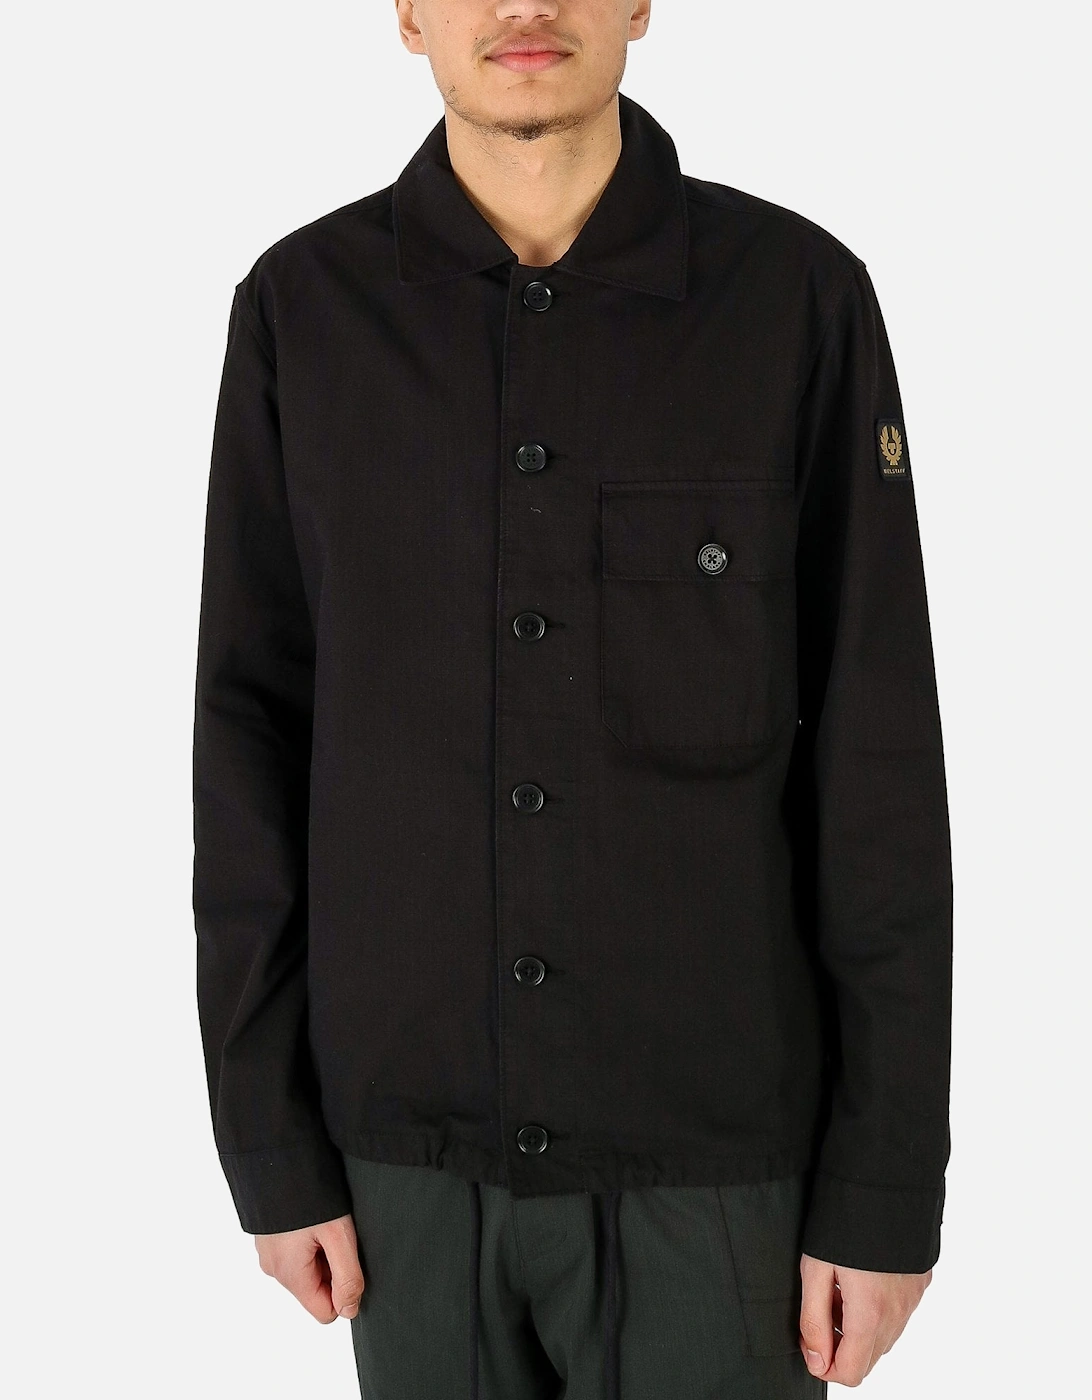 Gulley Button Black Overshirt Jacket